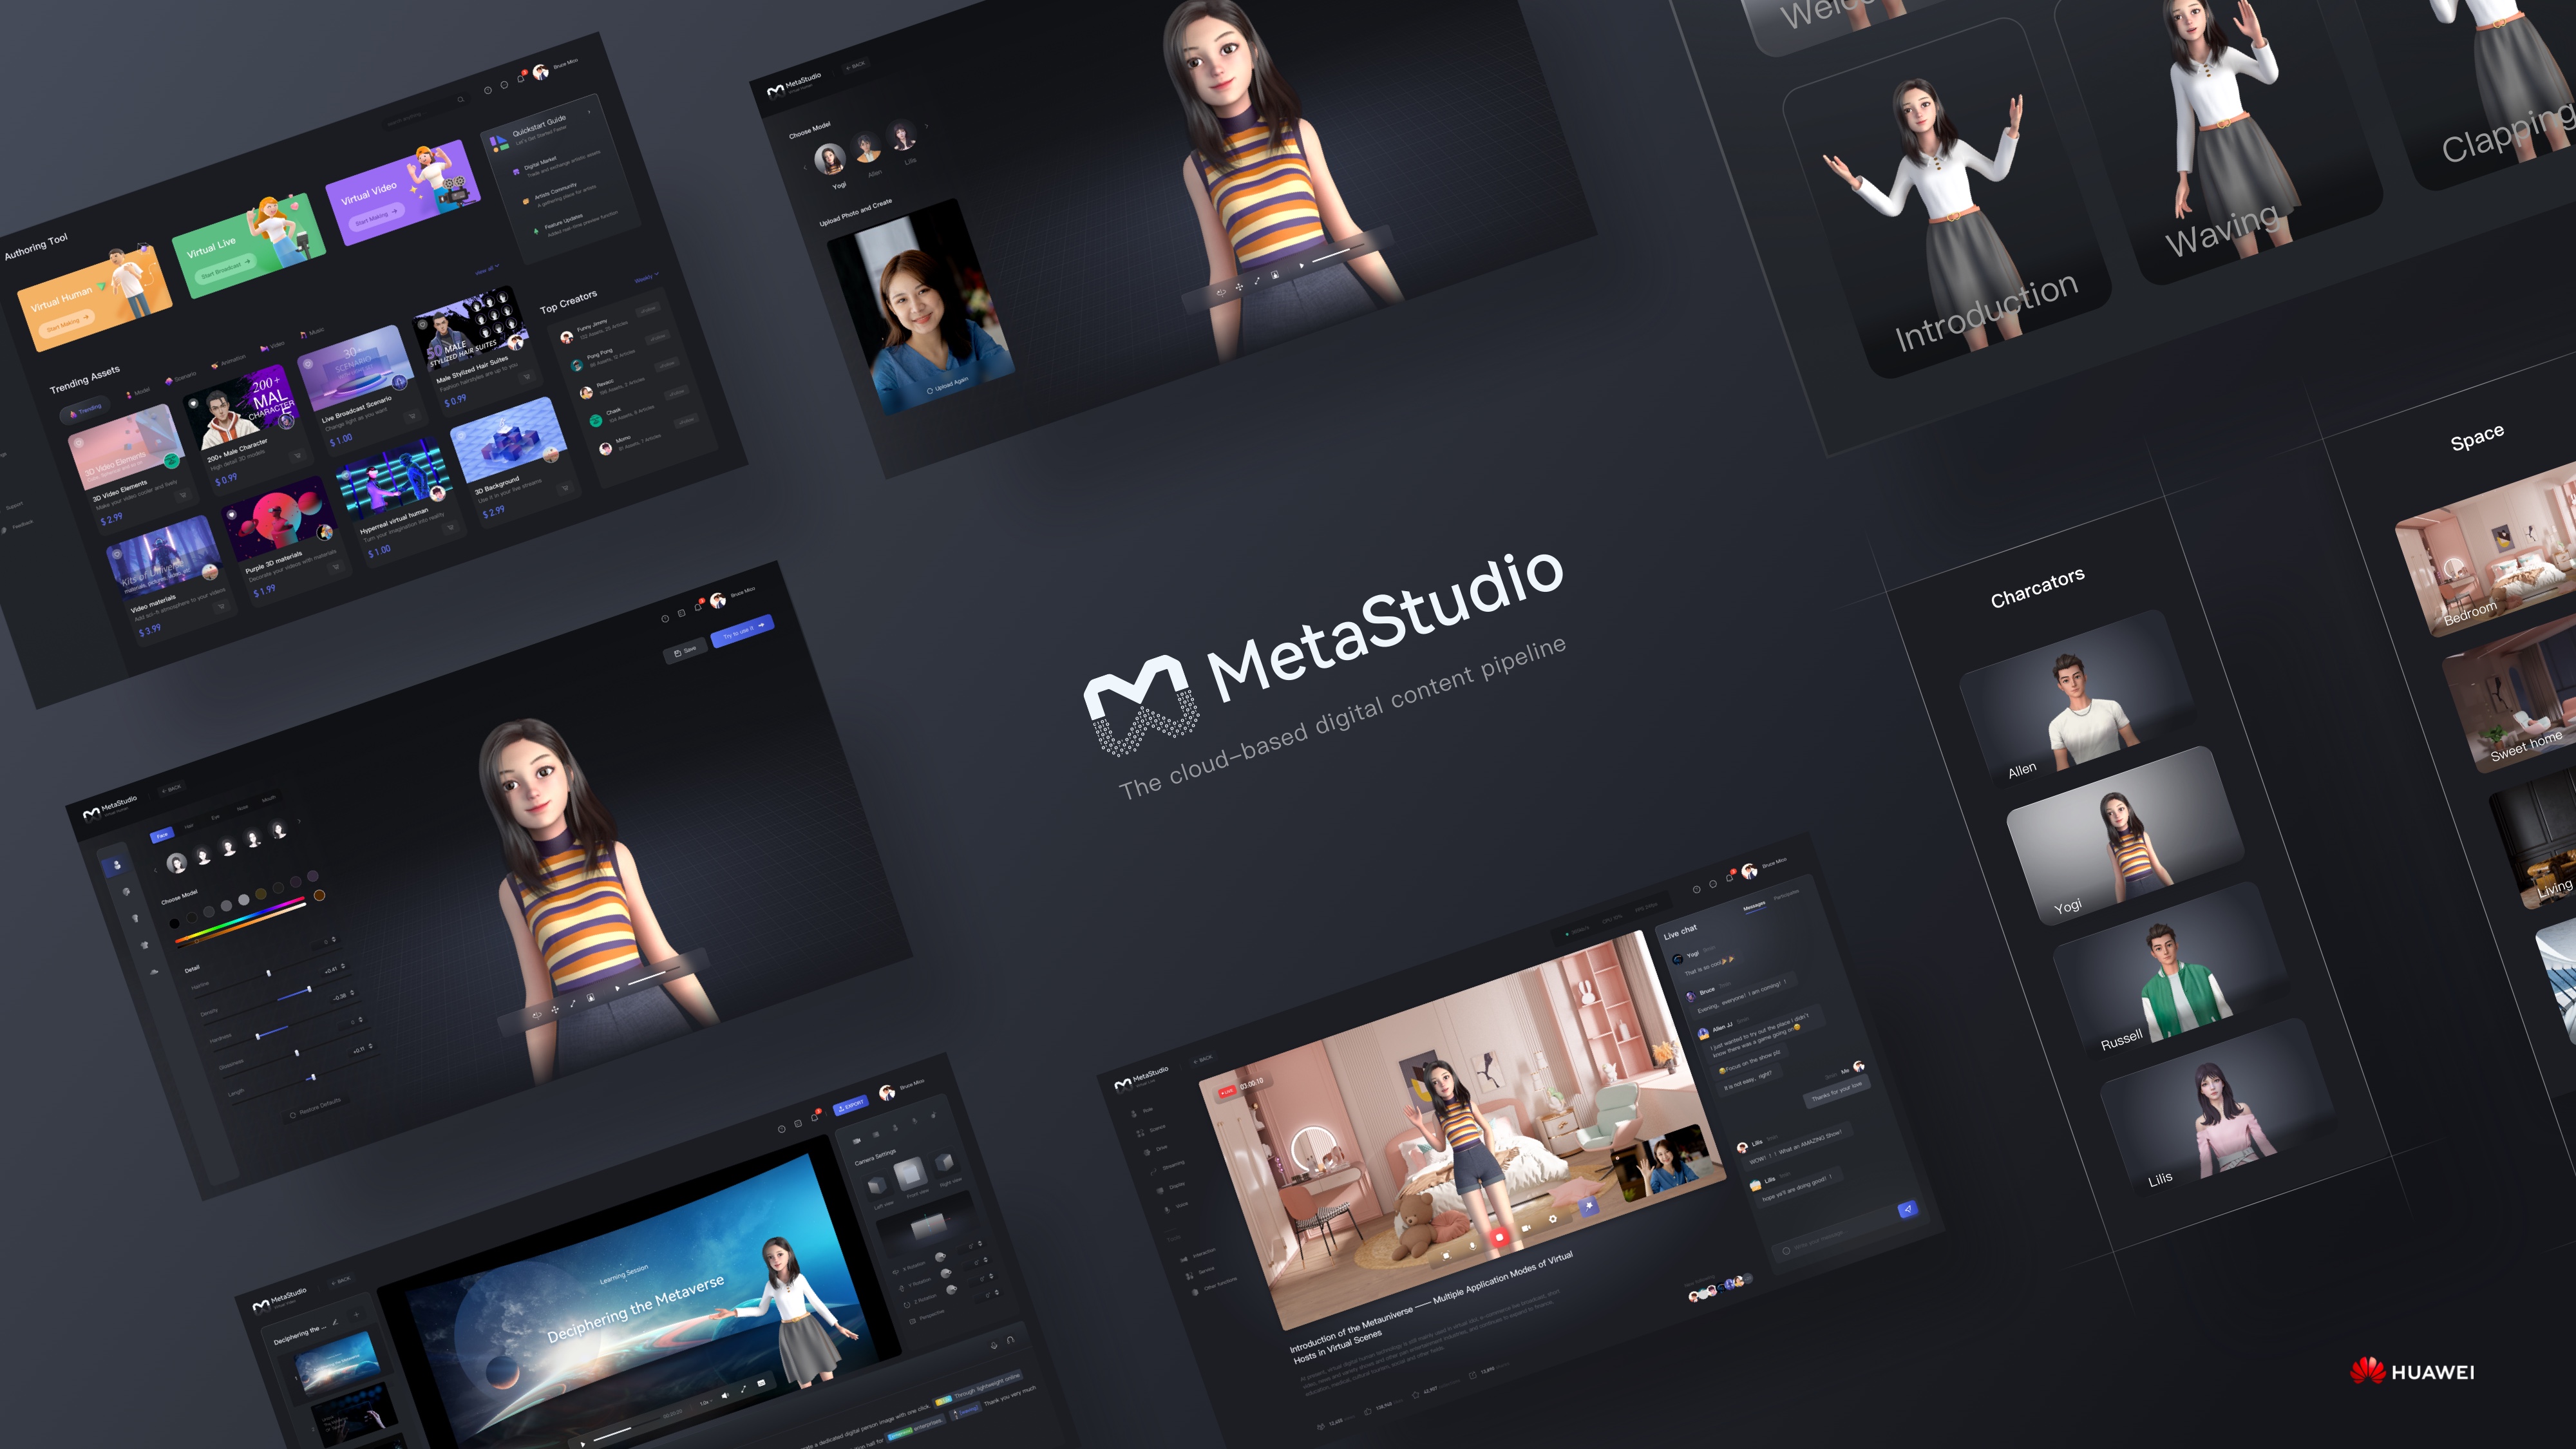 MetaStudio: Cloud-based digital content pipeline